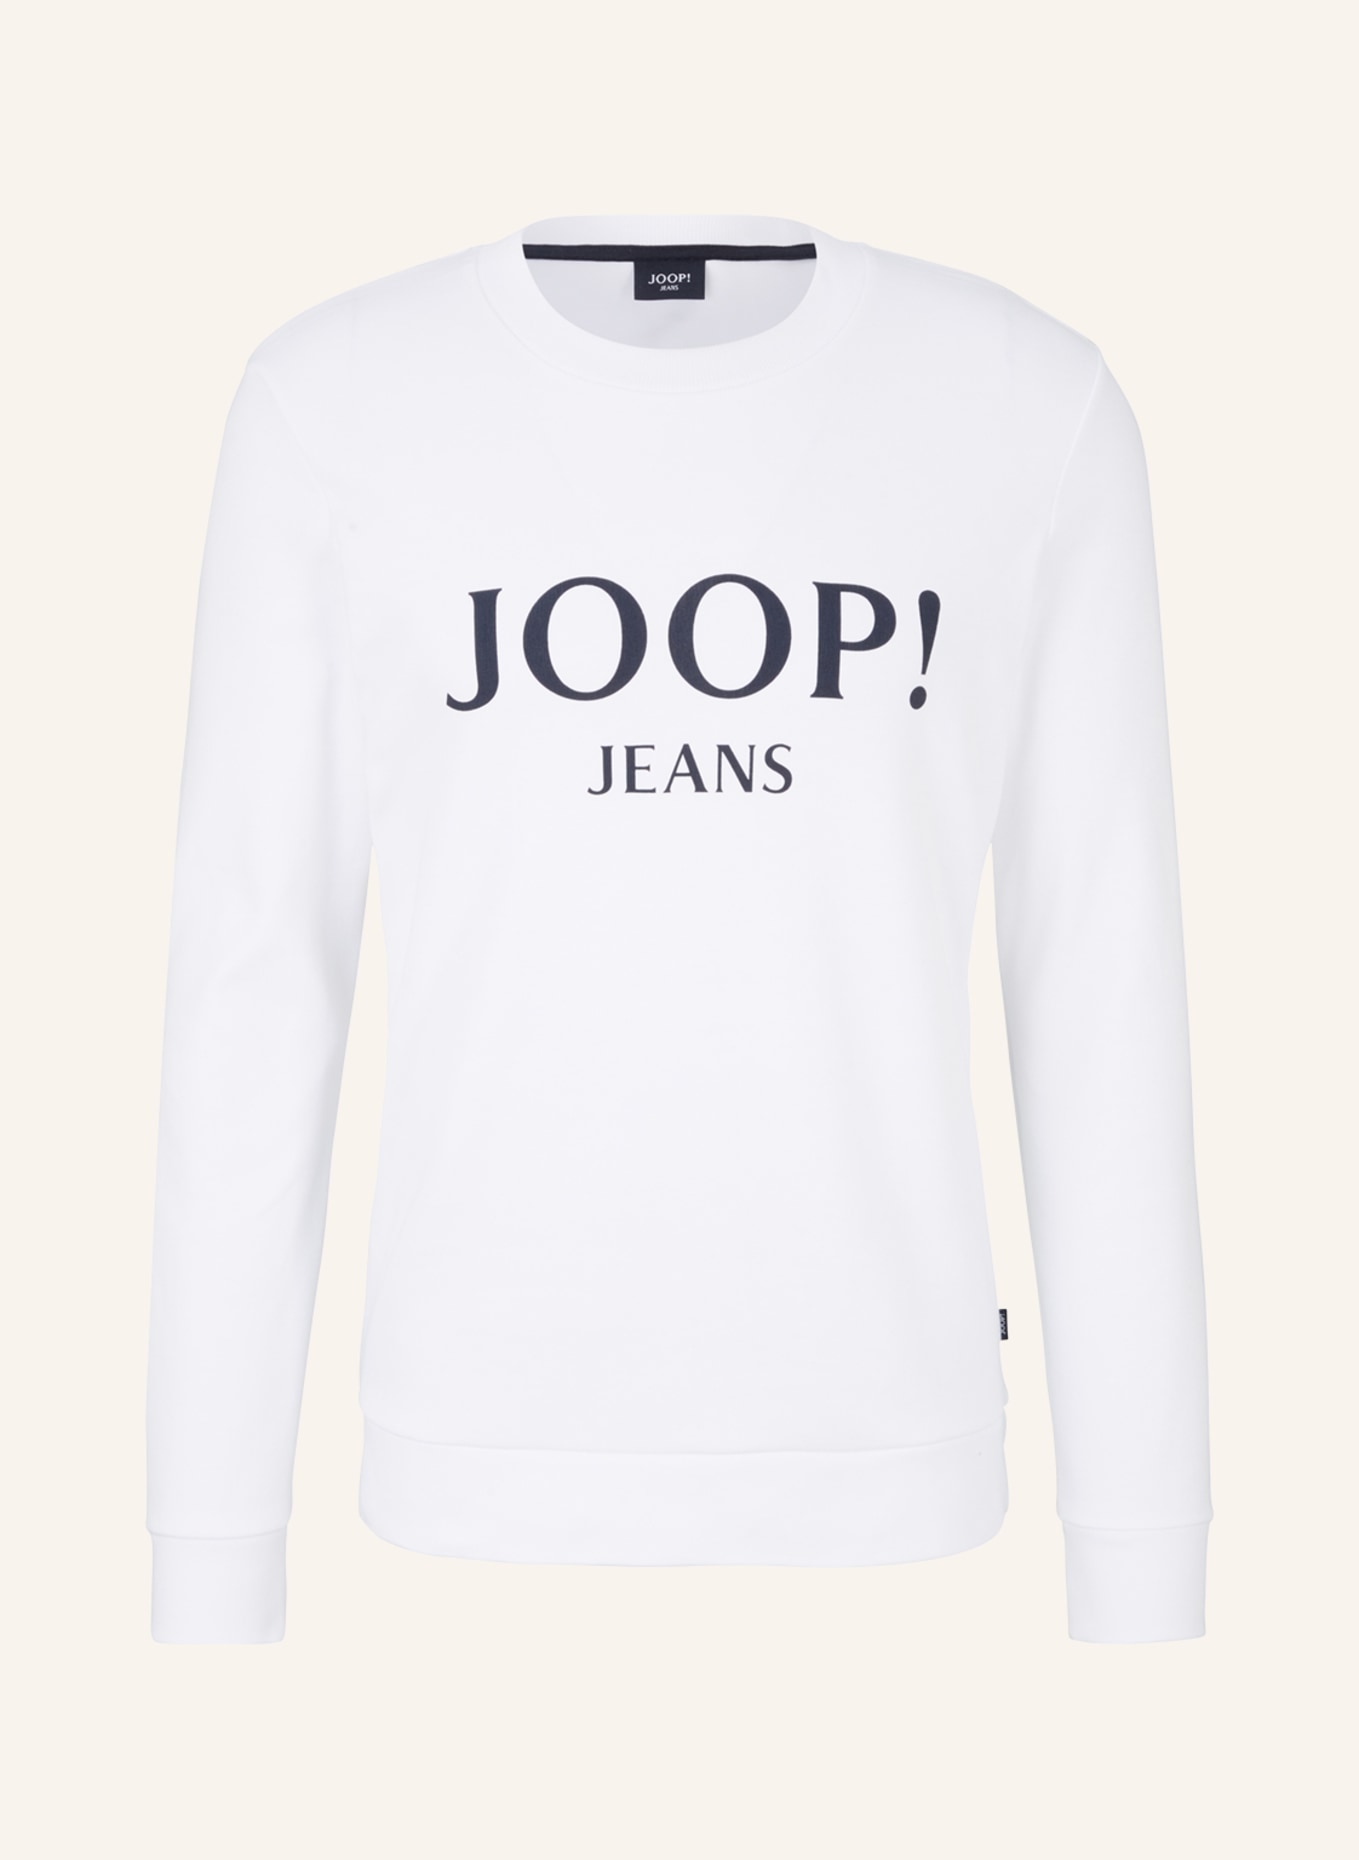 JOOP! JEANS Sweatshirt, Farbe: WEISS (Bild 1)